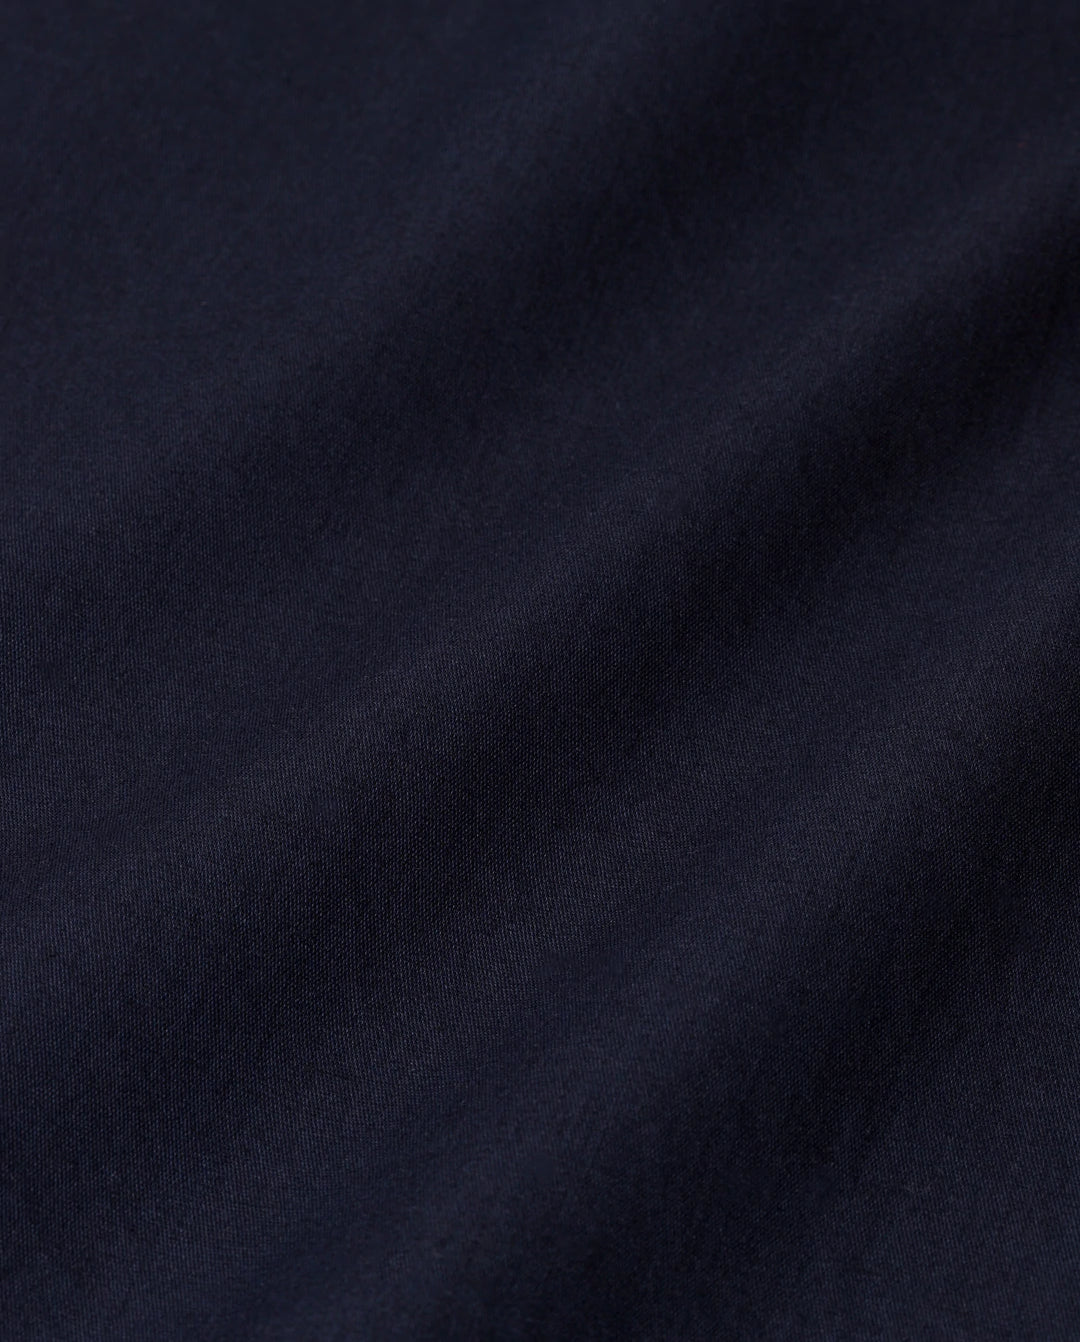 Drawstring cotton pants in dark blue